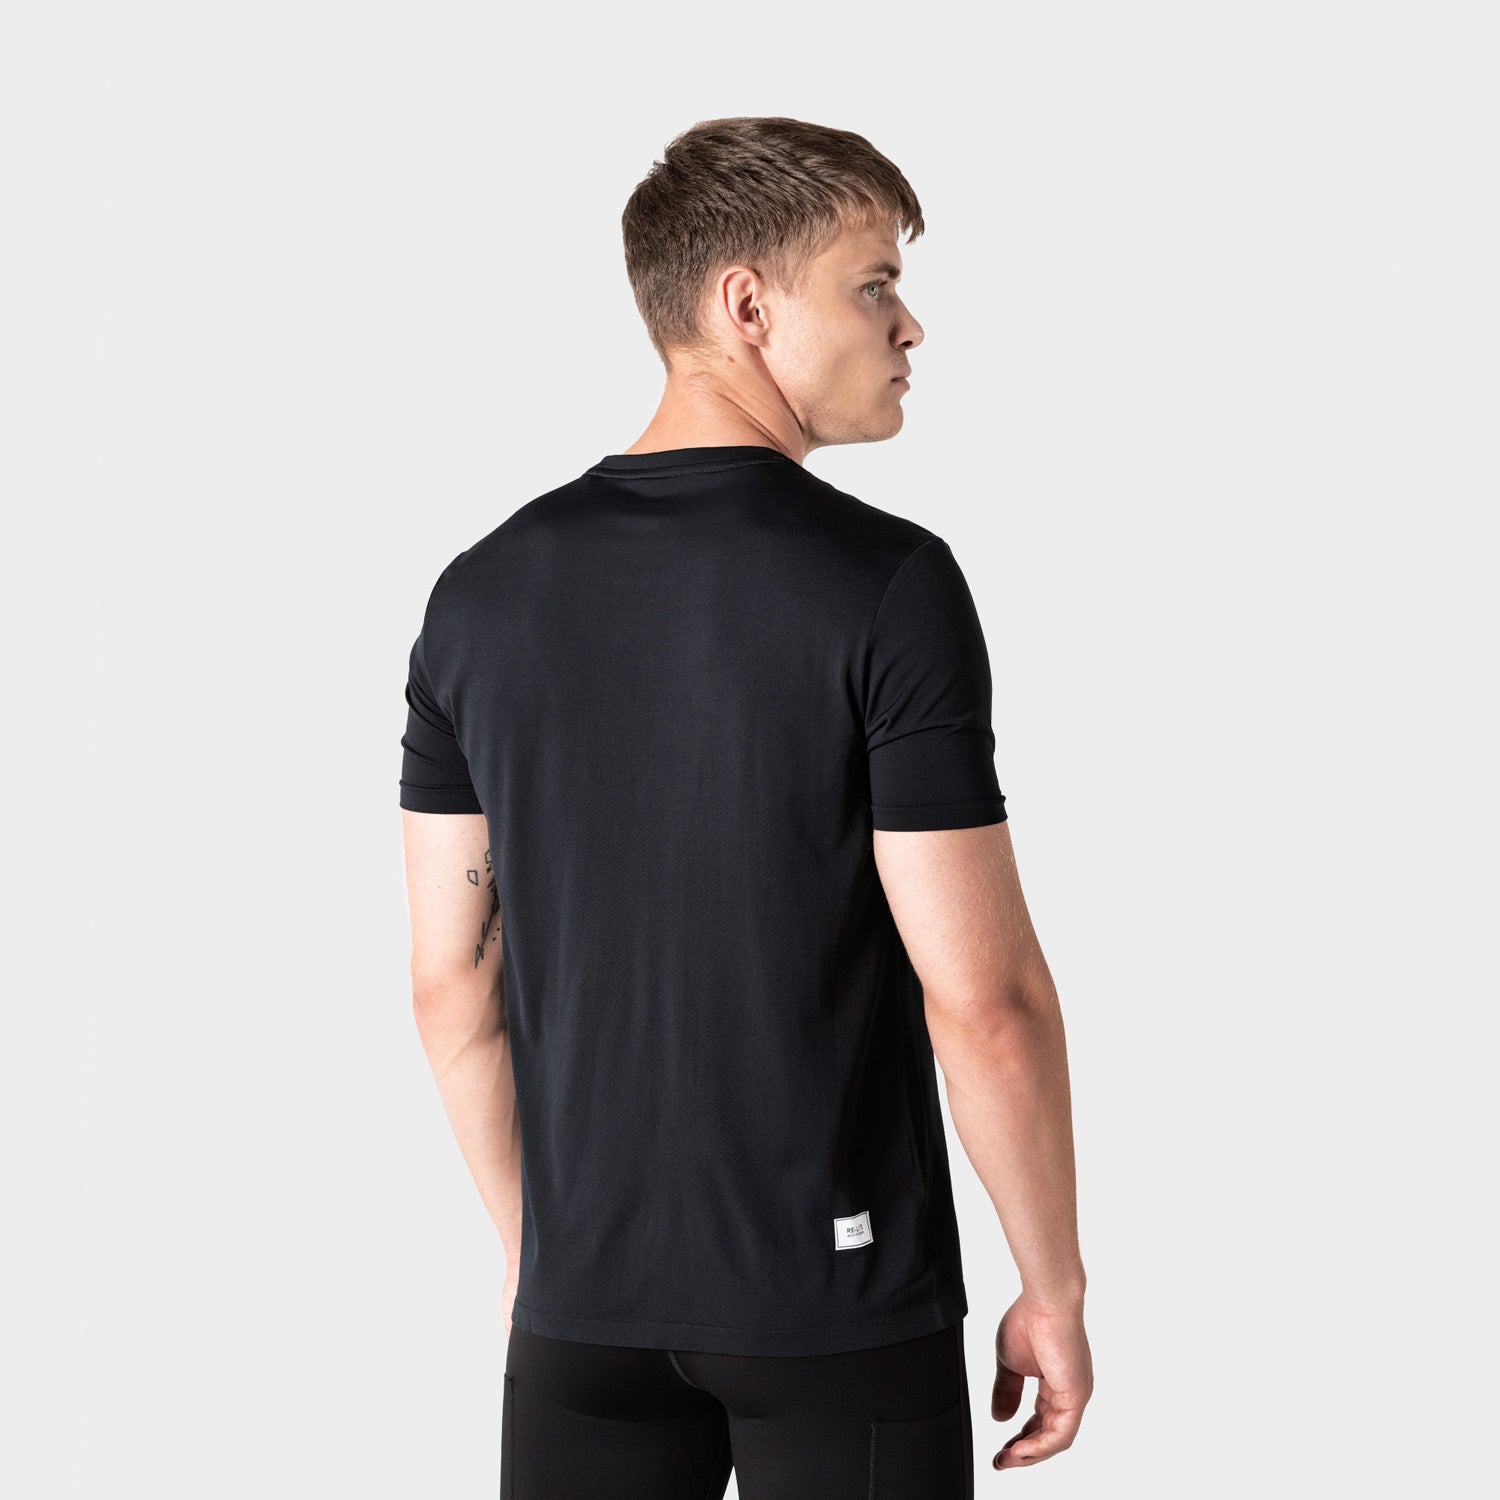 Liiteguard RE-LIITE T-SHIRT (Herr) T-shirts Black